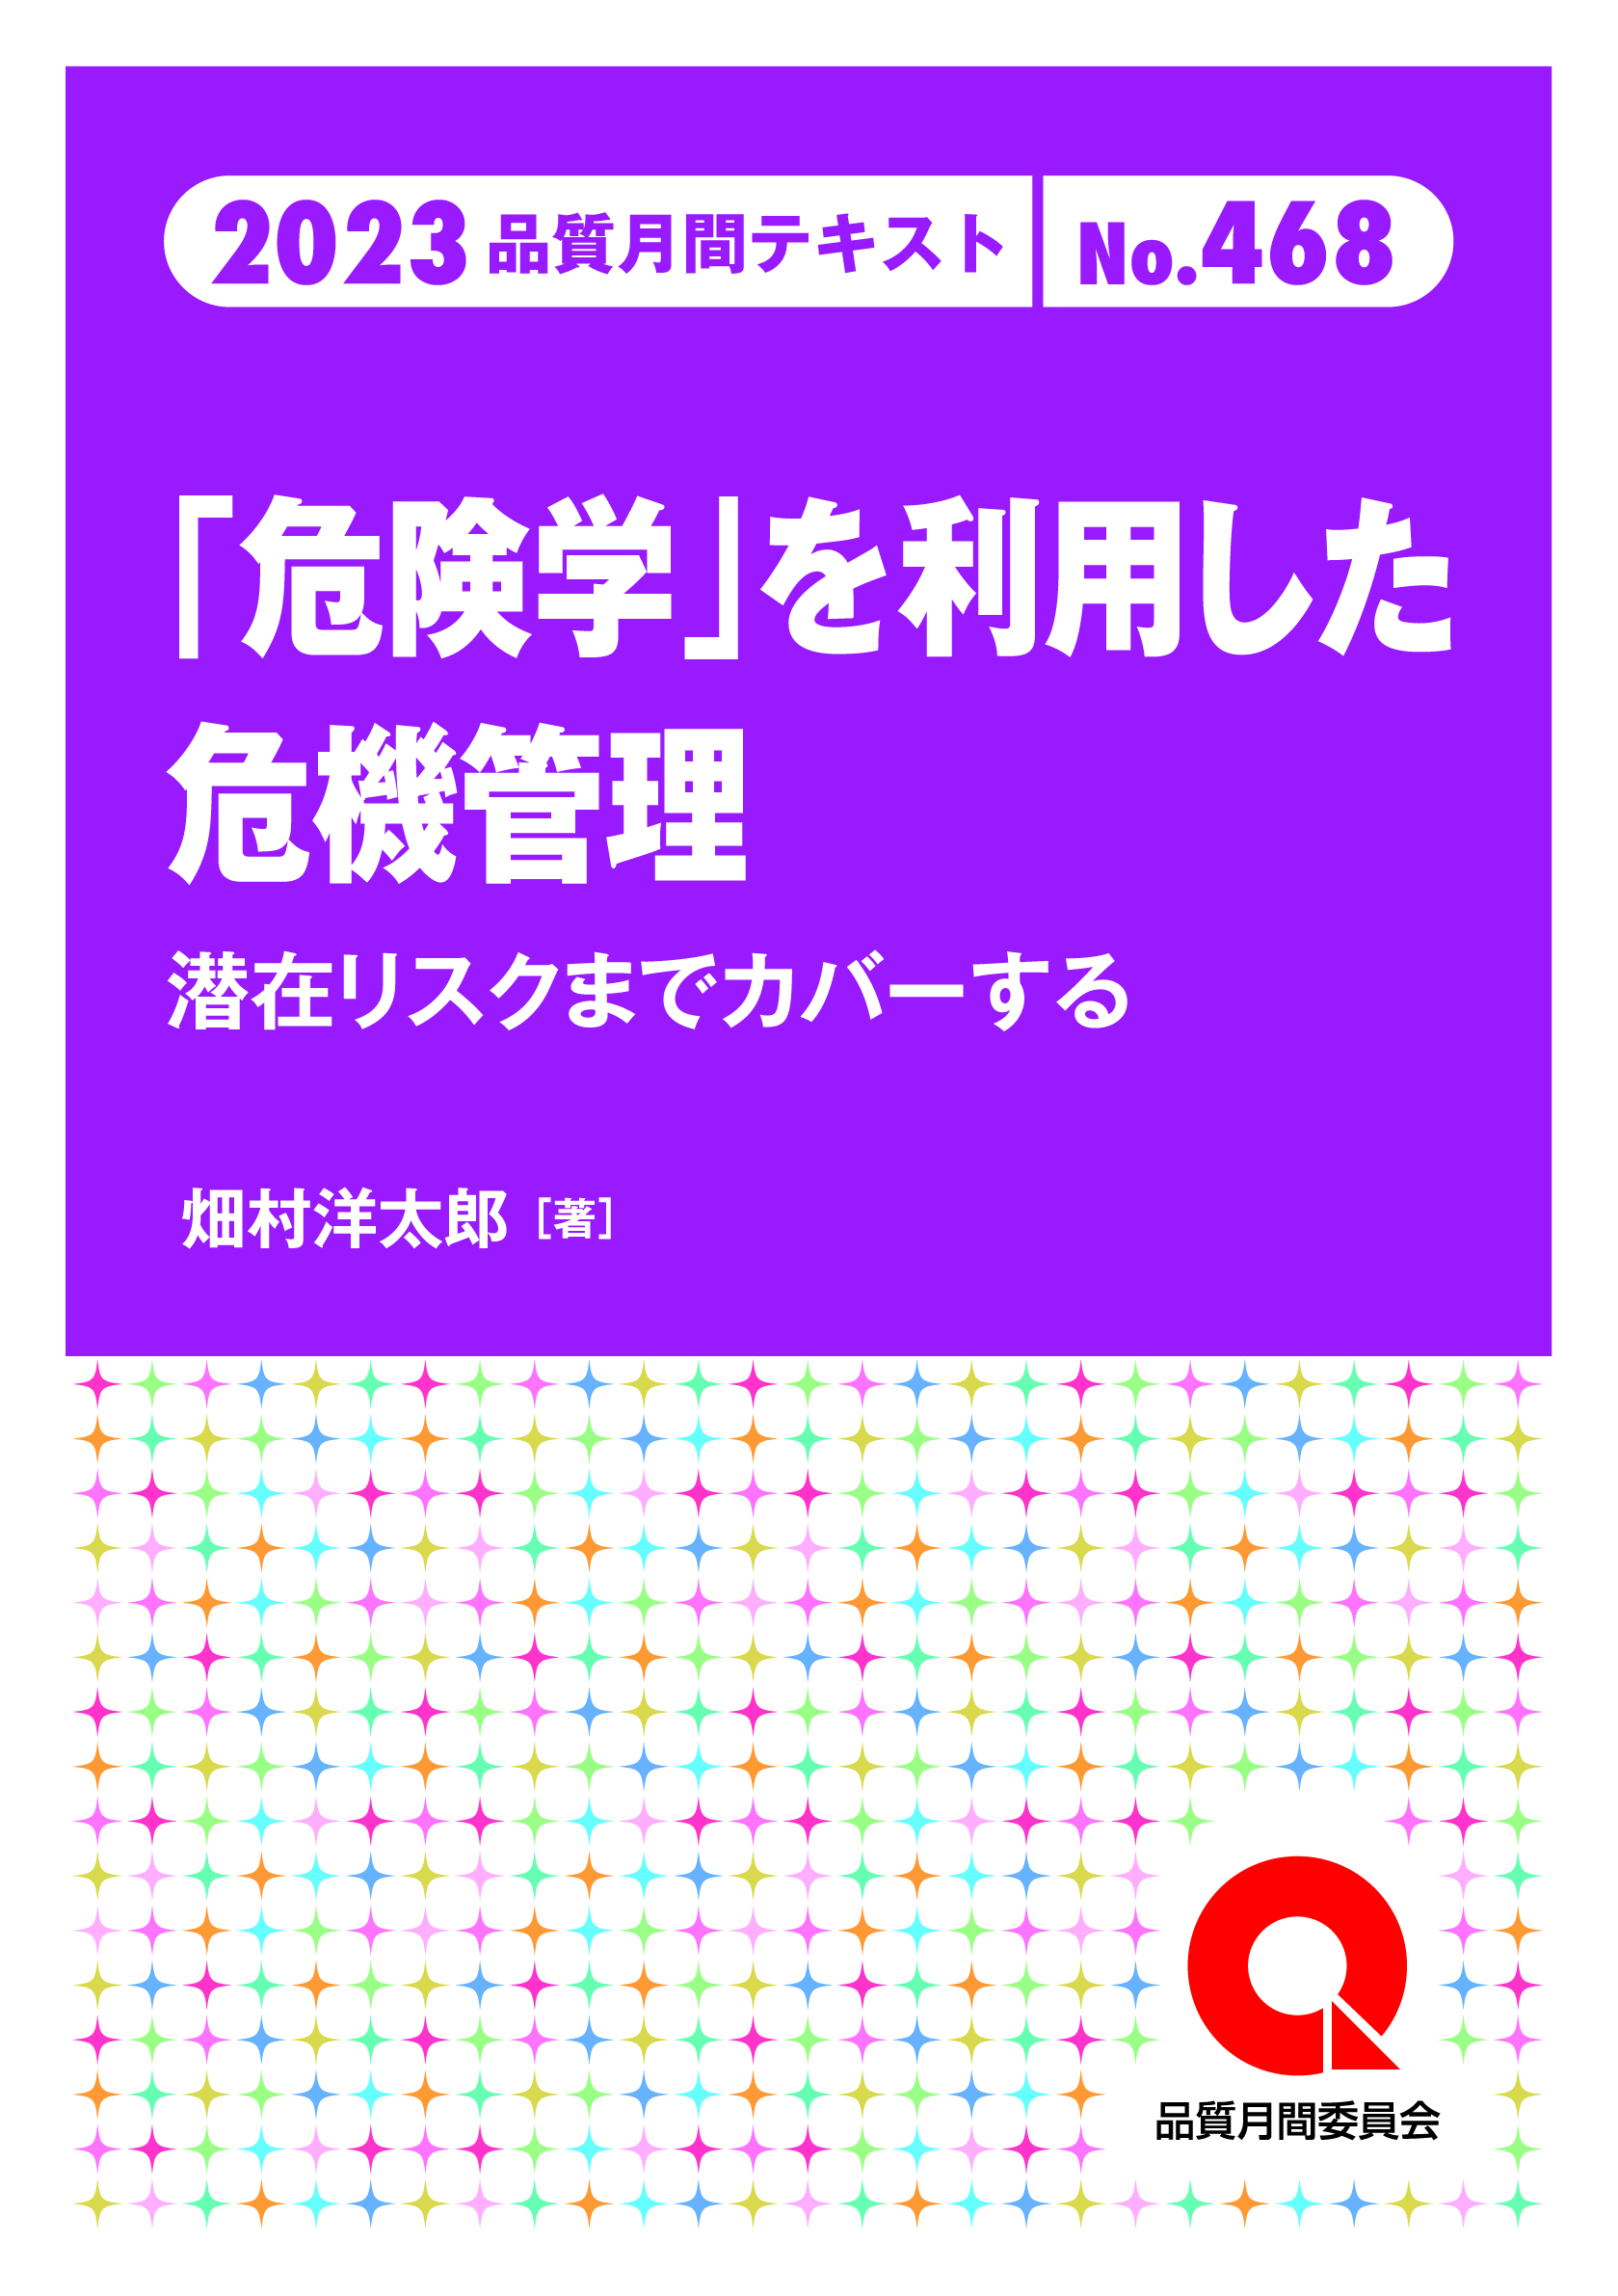 注目商品 一般財団法人日本規格協会 JISハンドブック2022 48-1 Book 文芸全般 FONDOBLAKA